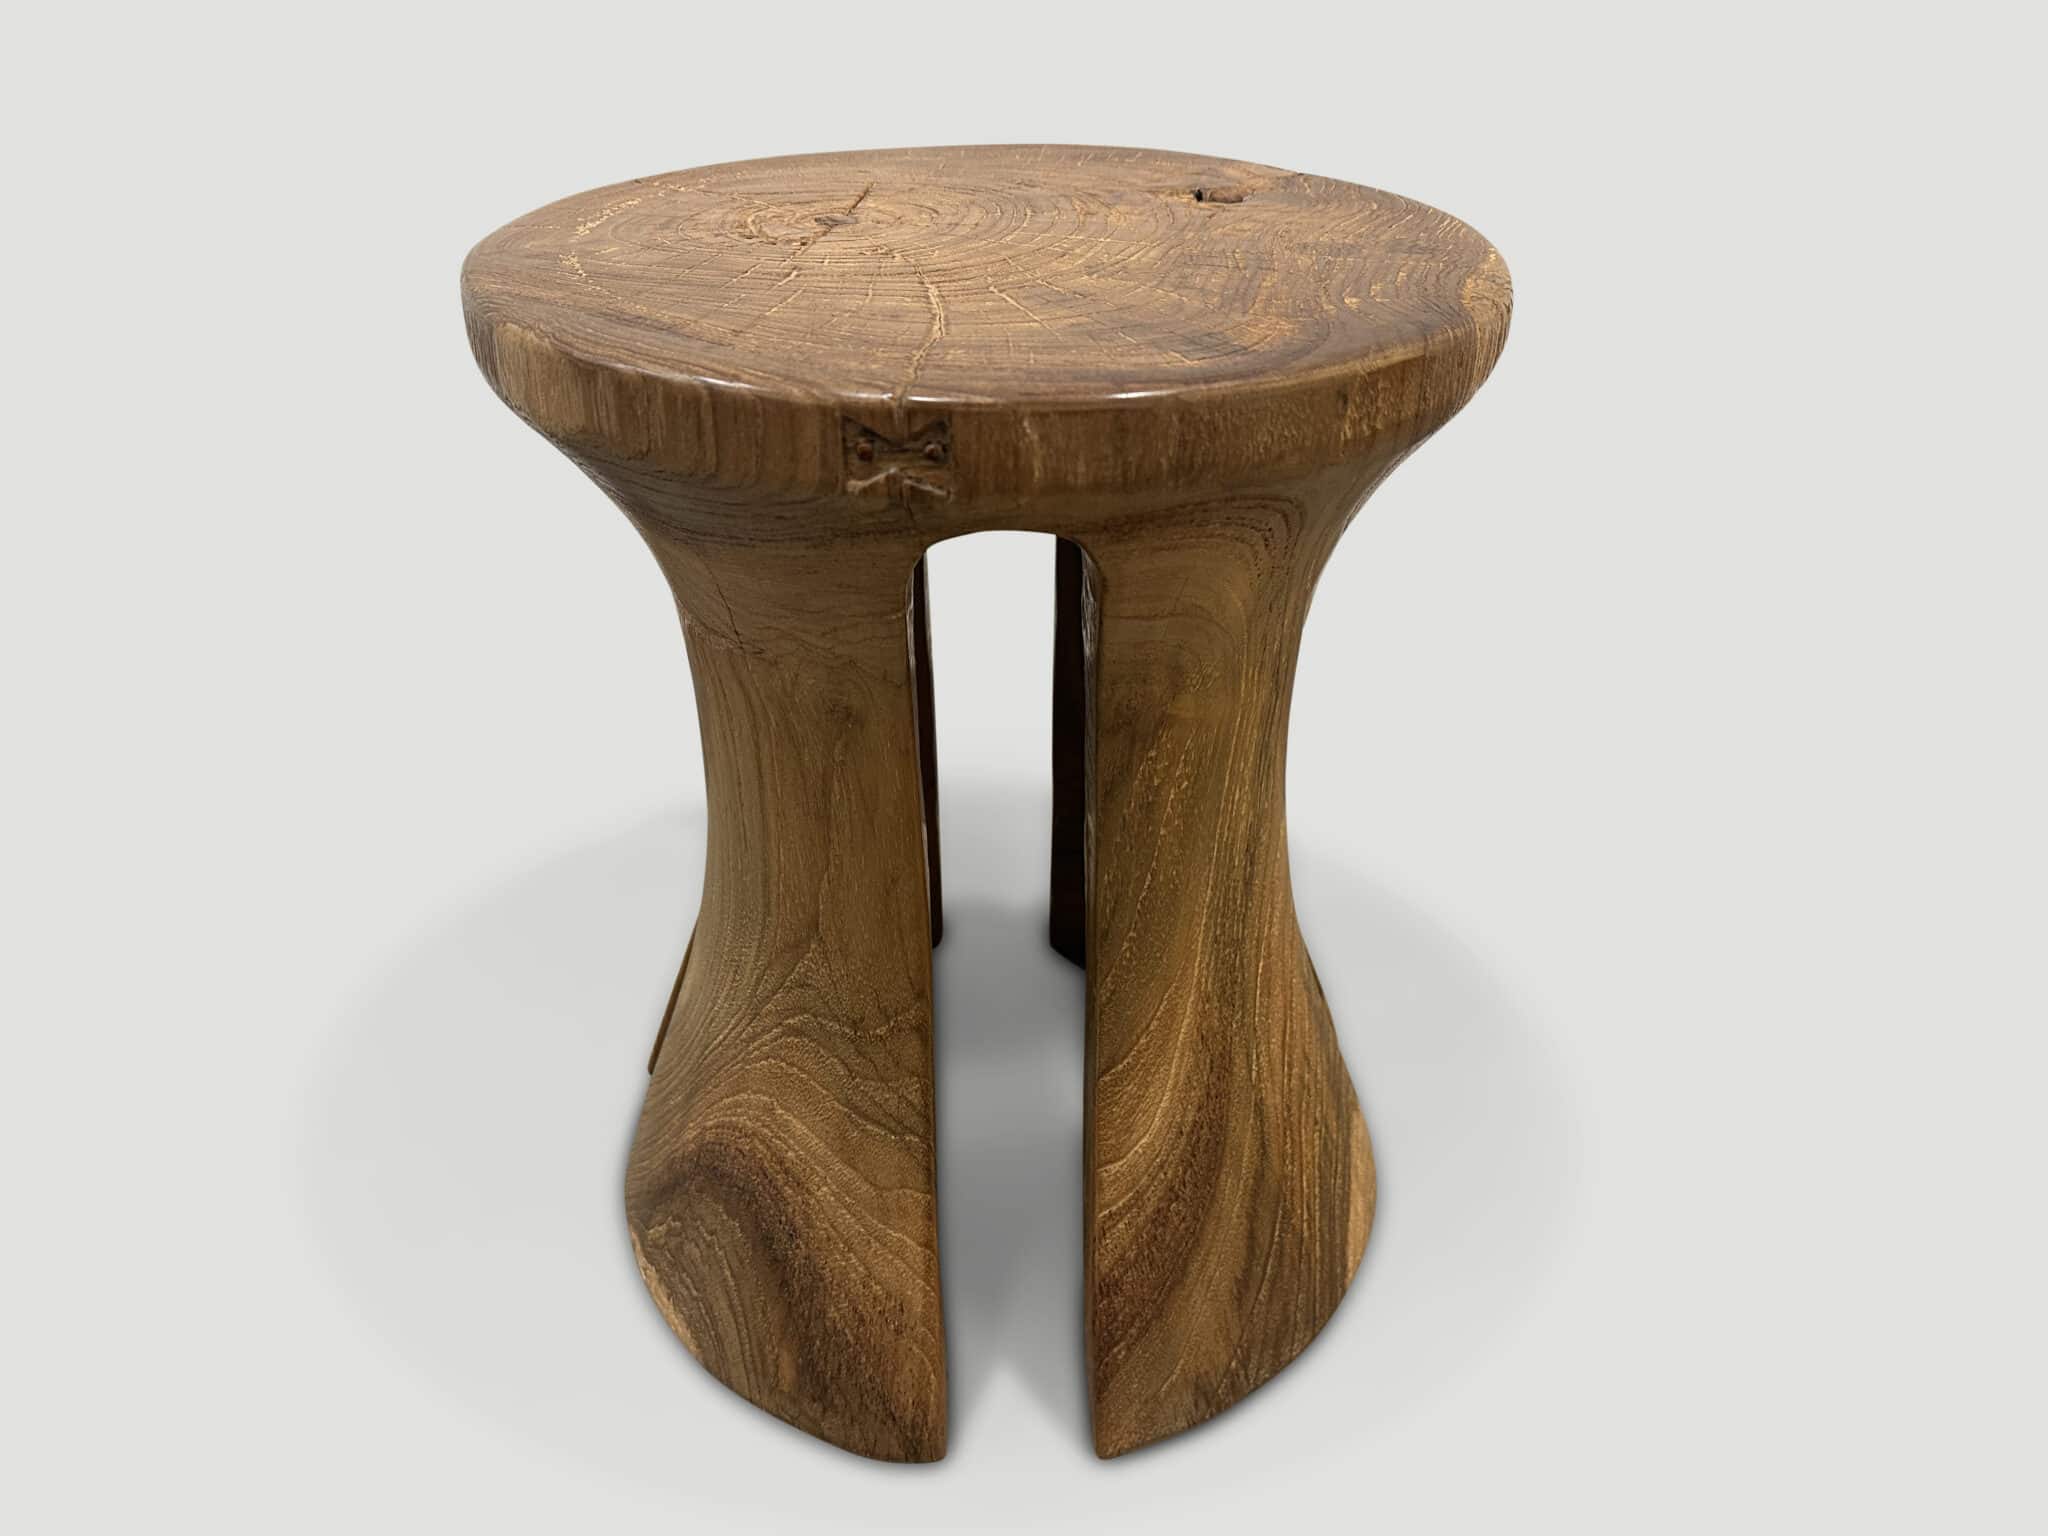 teak wood sculptural side table or stool